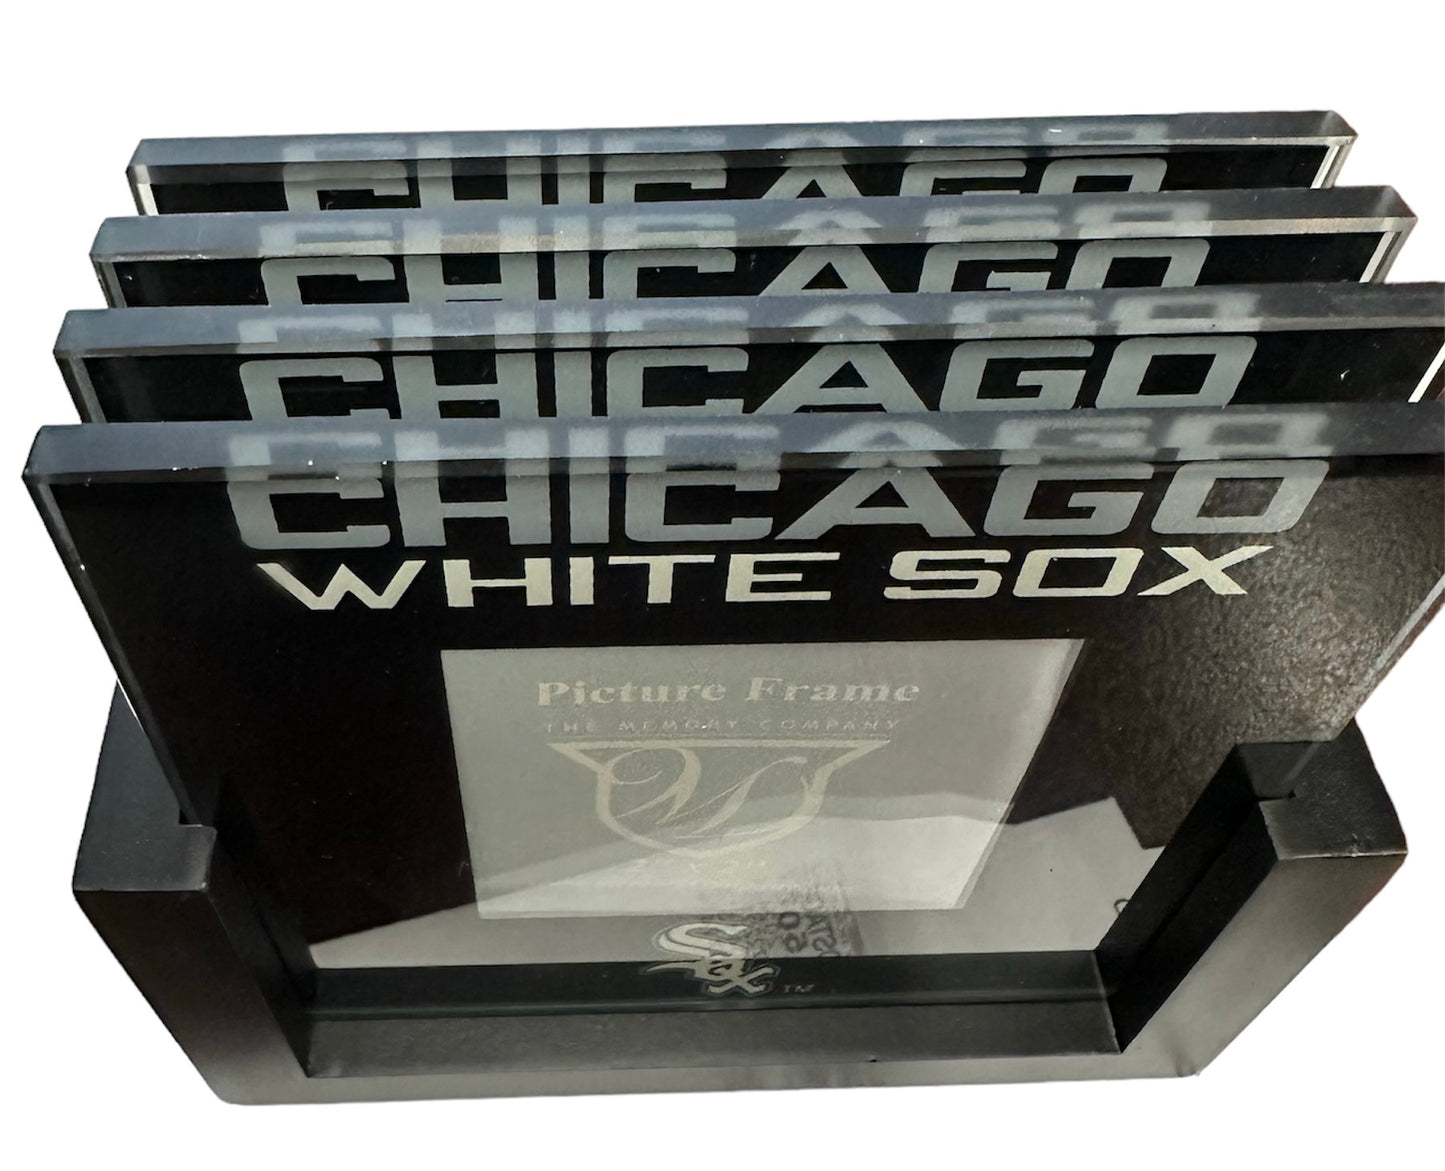 The Memory Company Chicago White Sox Art Glass Coaster Set